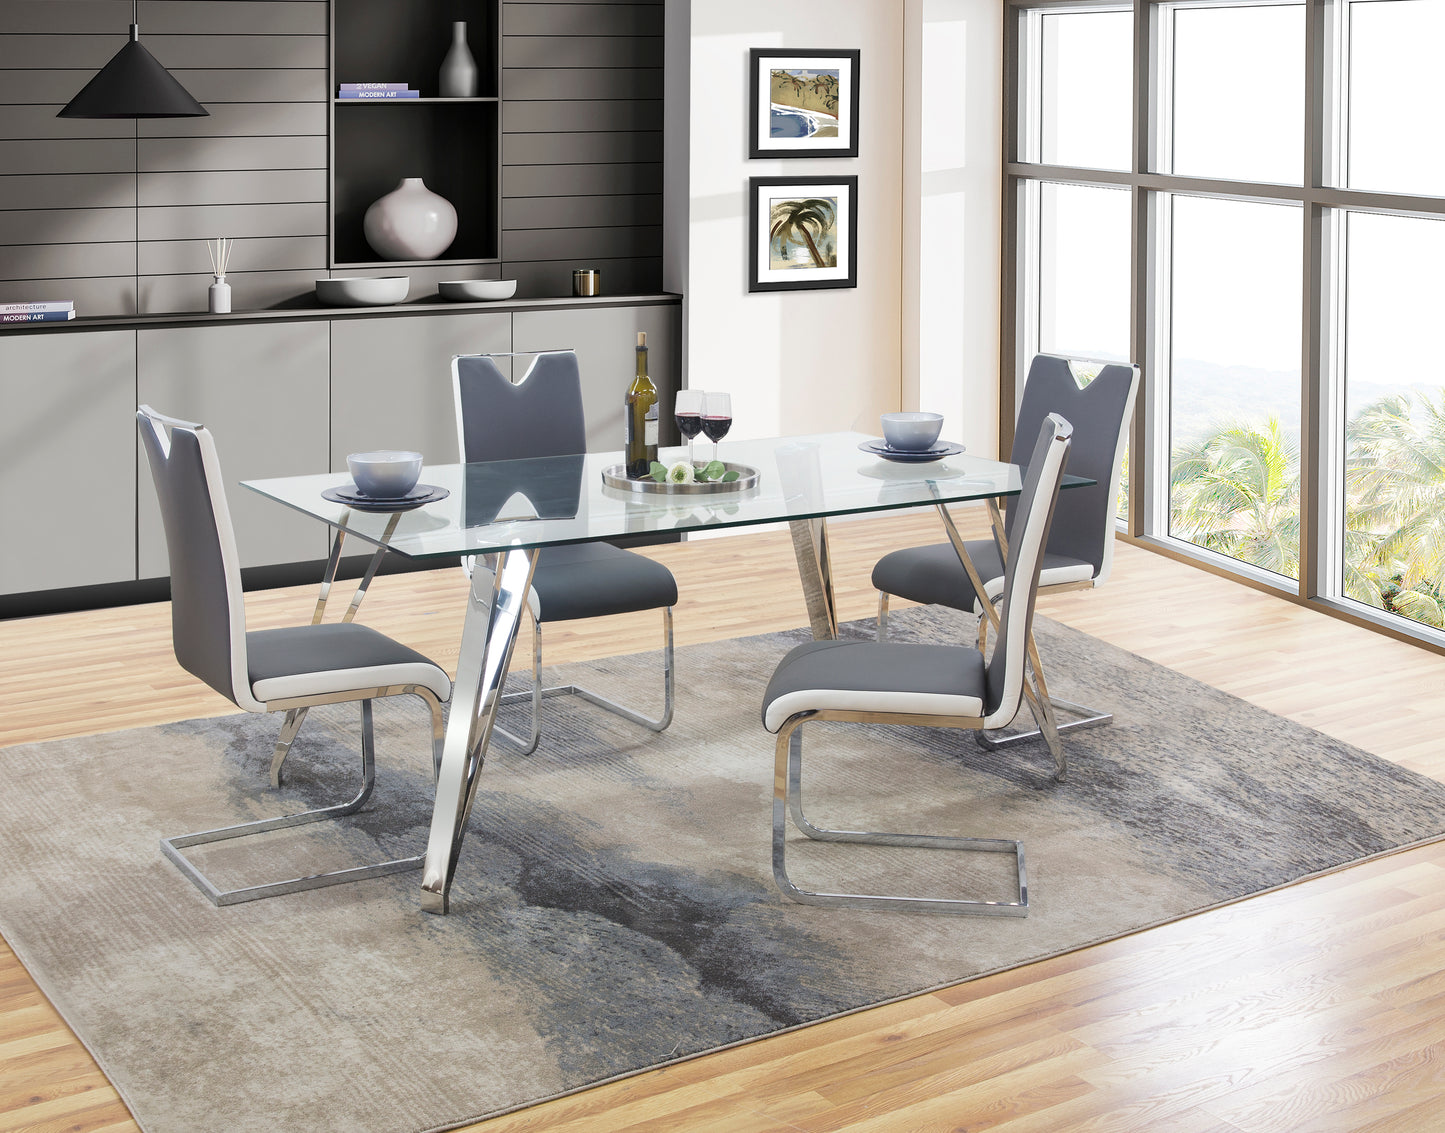 Carlo 5 Piece Dining Set with Skyline Grey/White Chairs